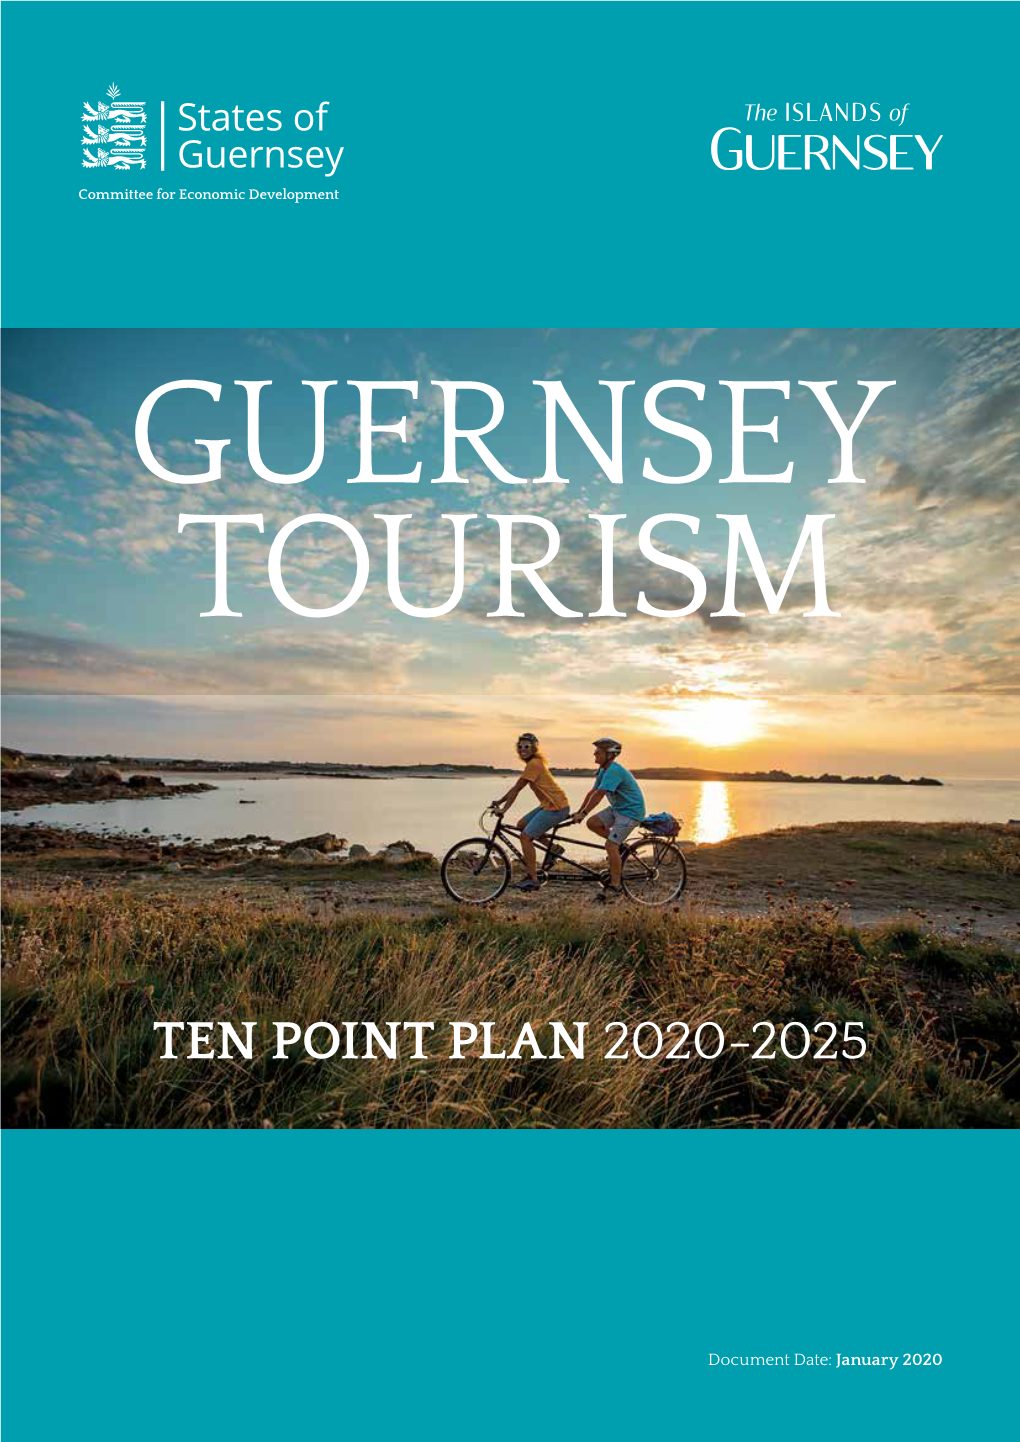 Ten Point Plan 2020-2025